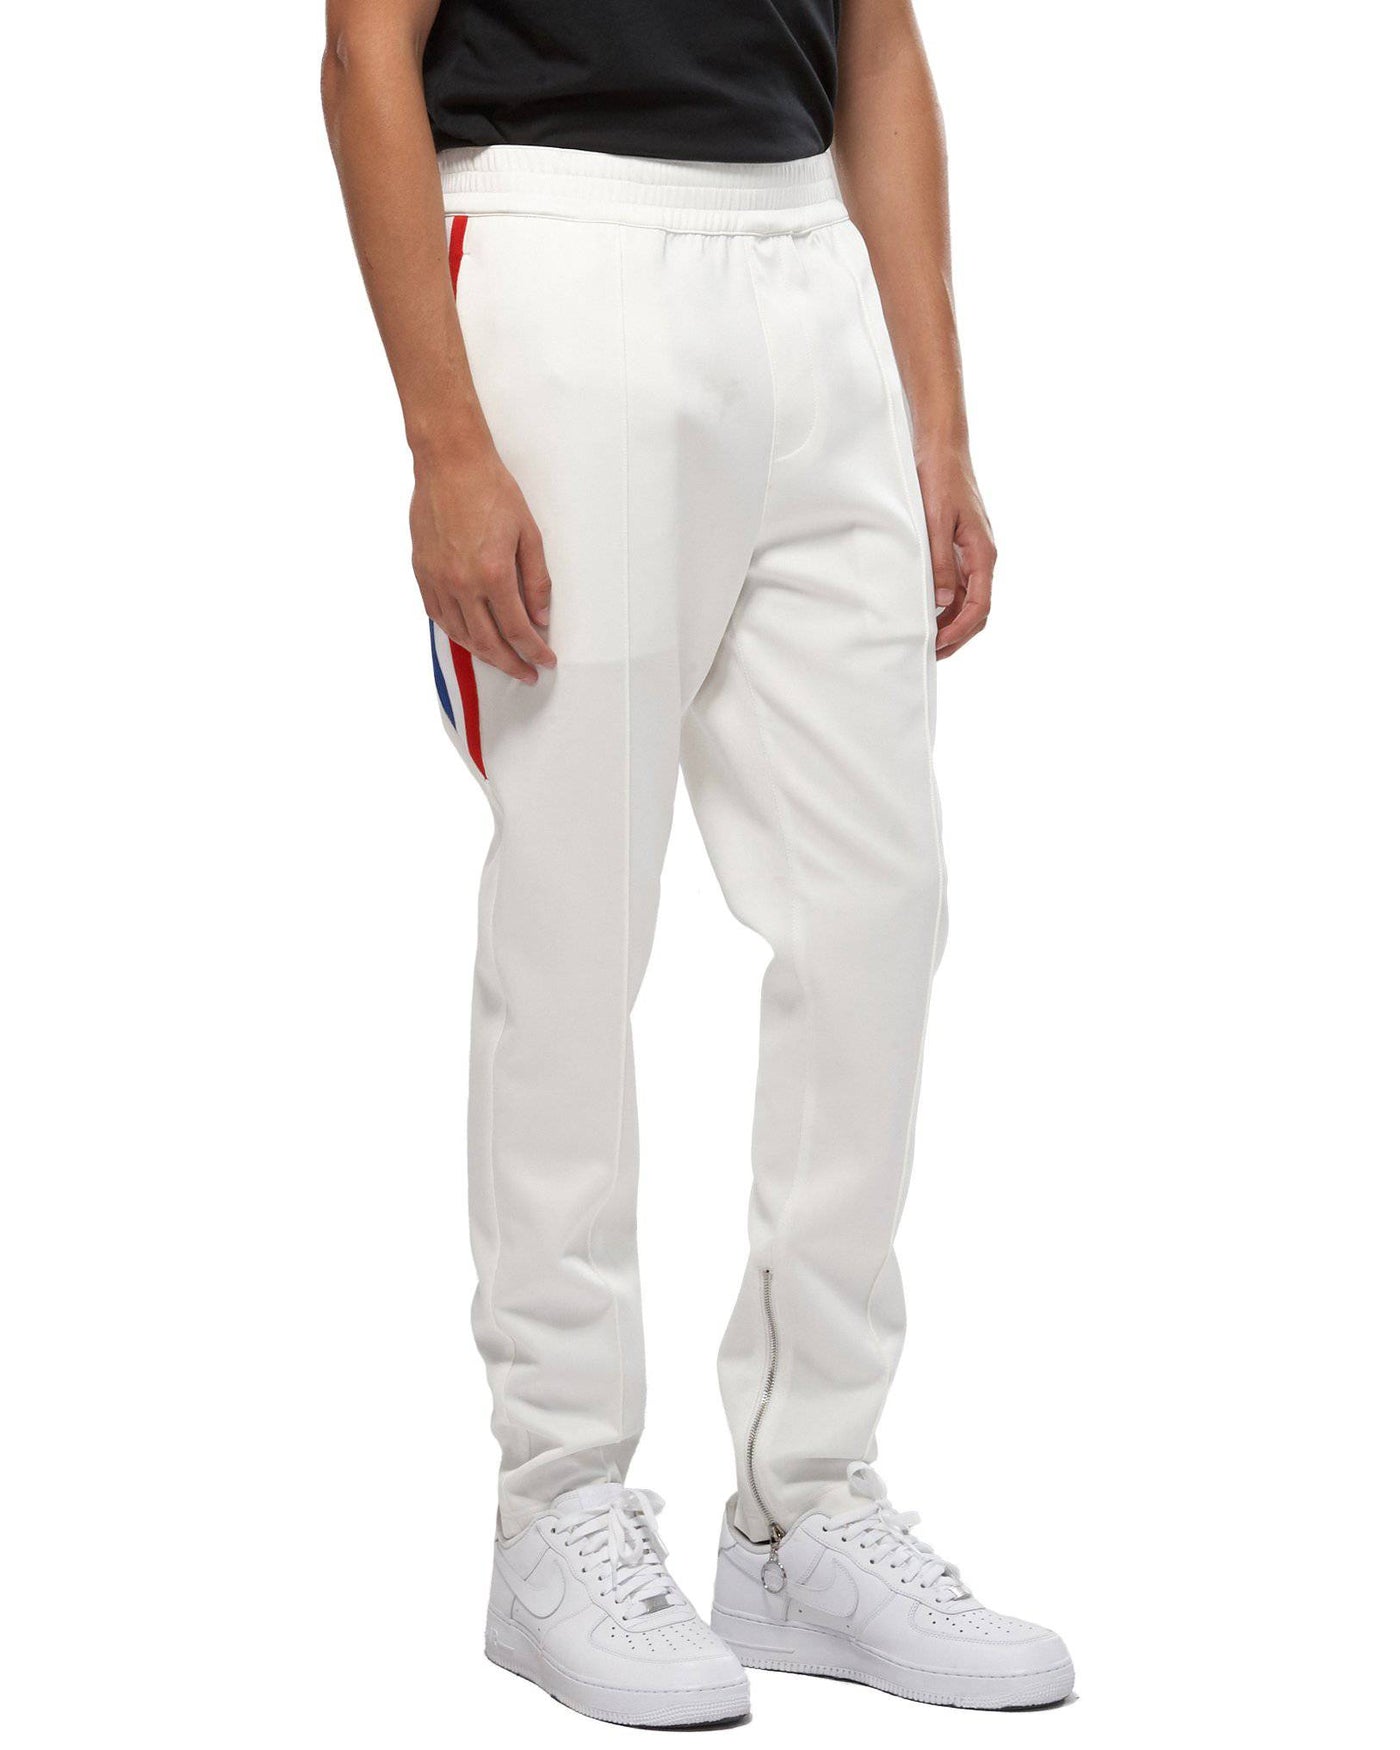 Konus Men's Track Pants With Knit Tape detail in White by Shop at Konus